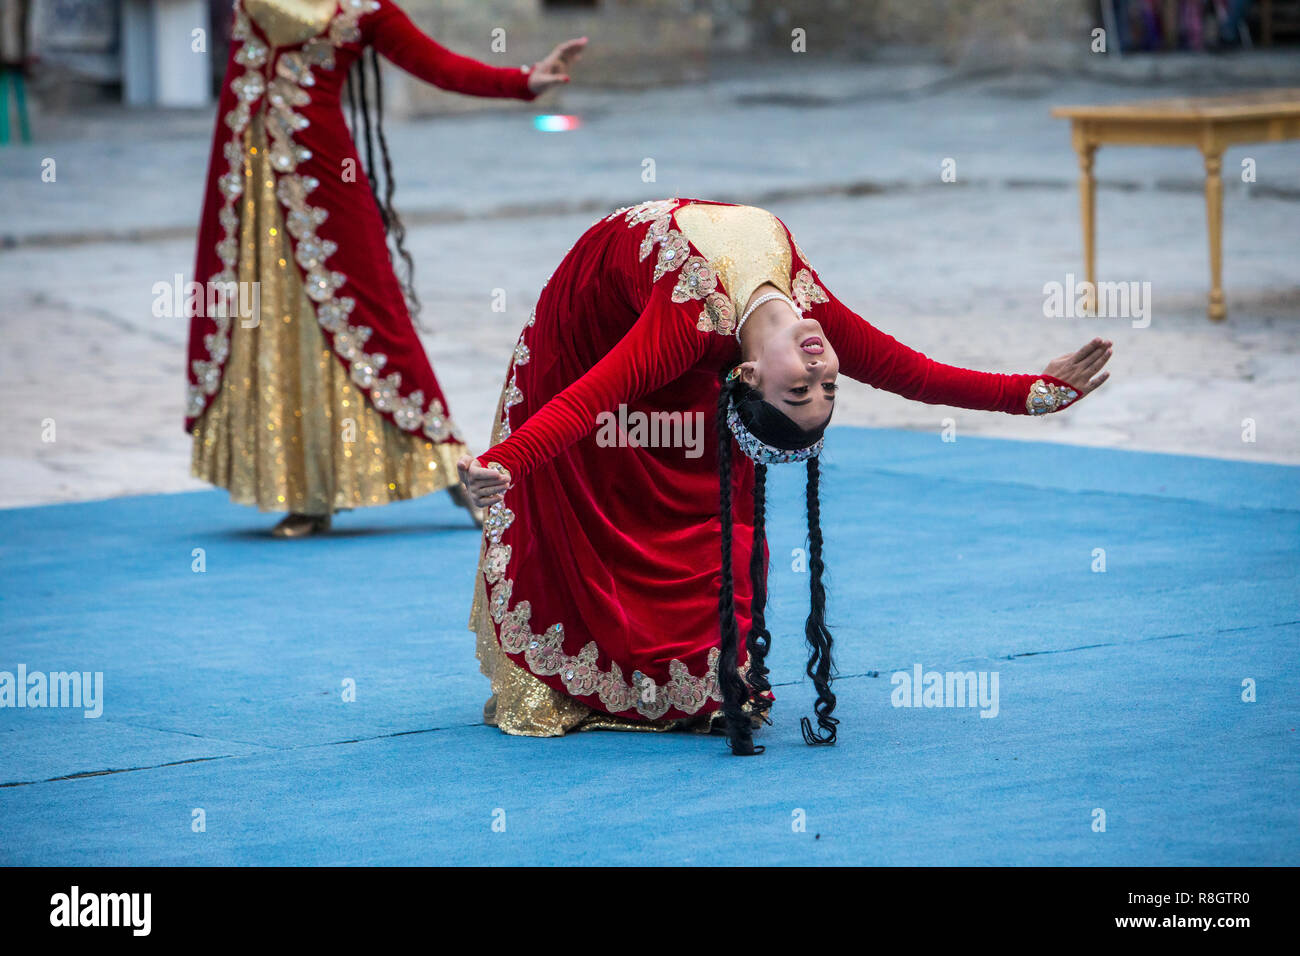 Traditional dance, folklore, spectacle, entertainment, performance, Samarkand, Uzbekistan Stock Photo